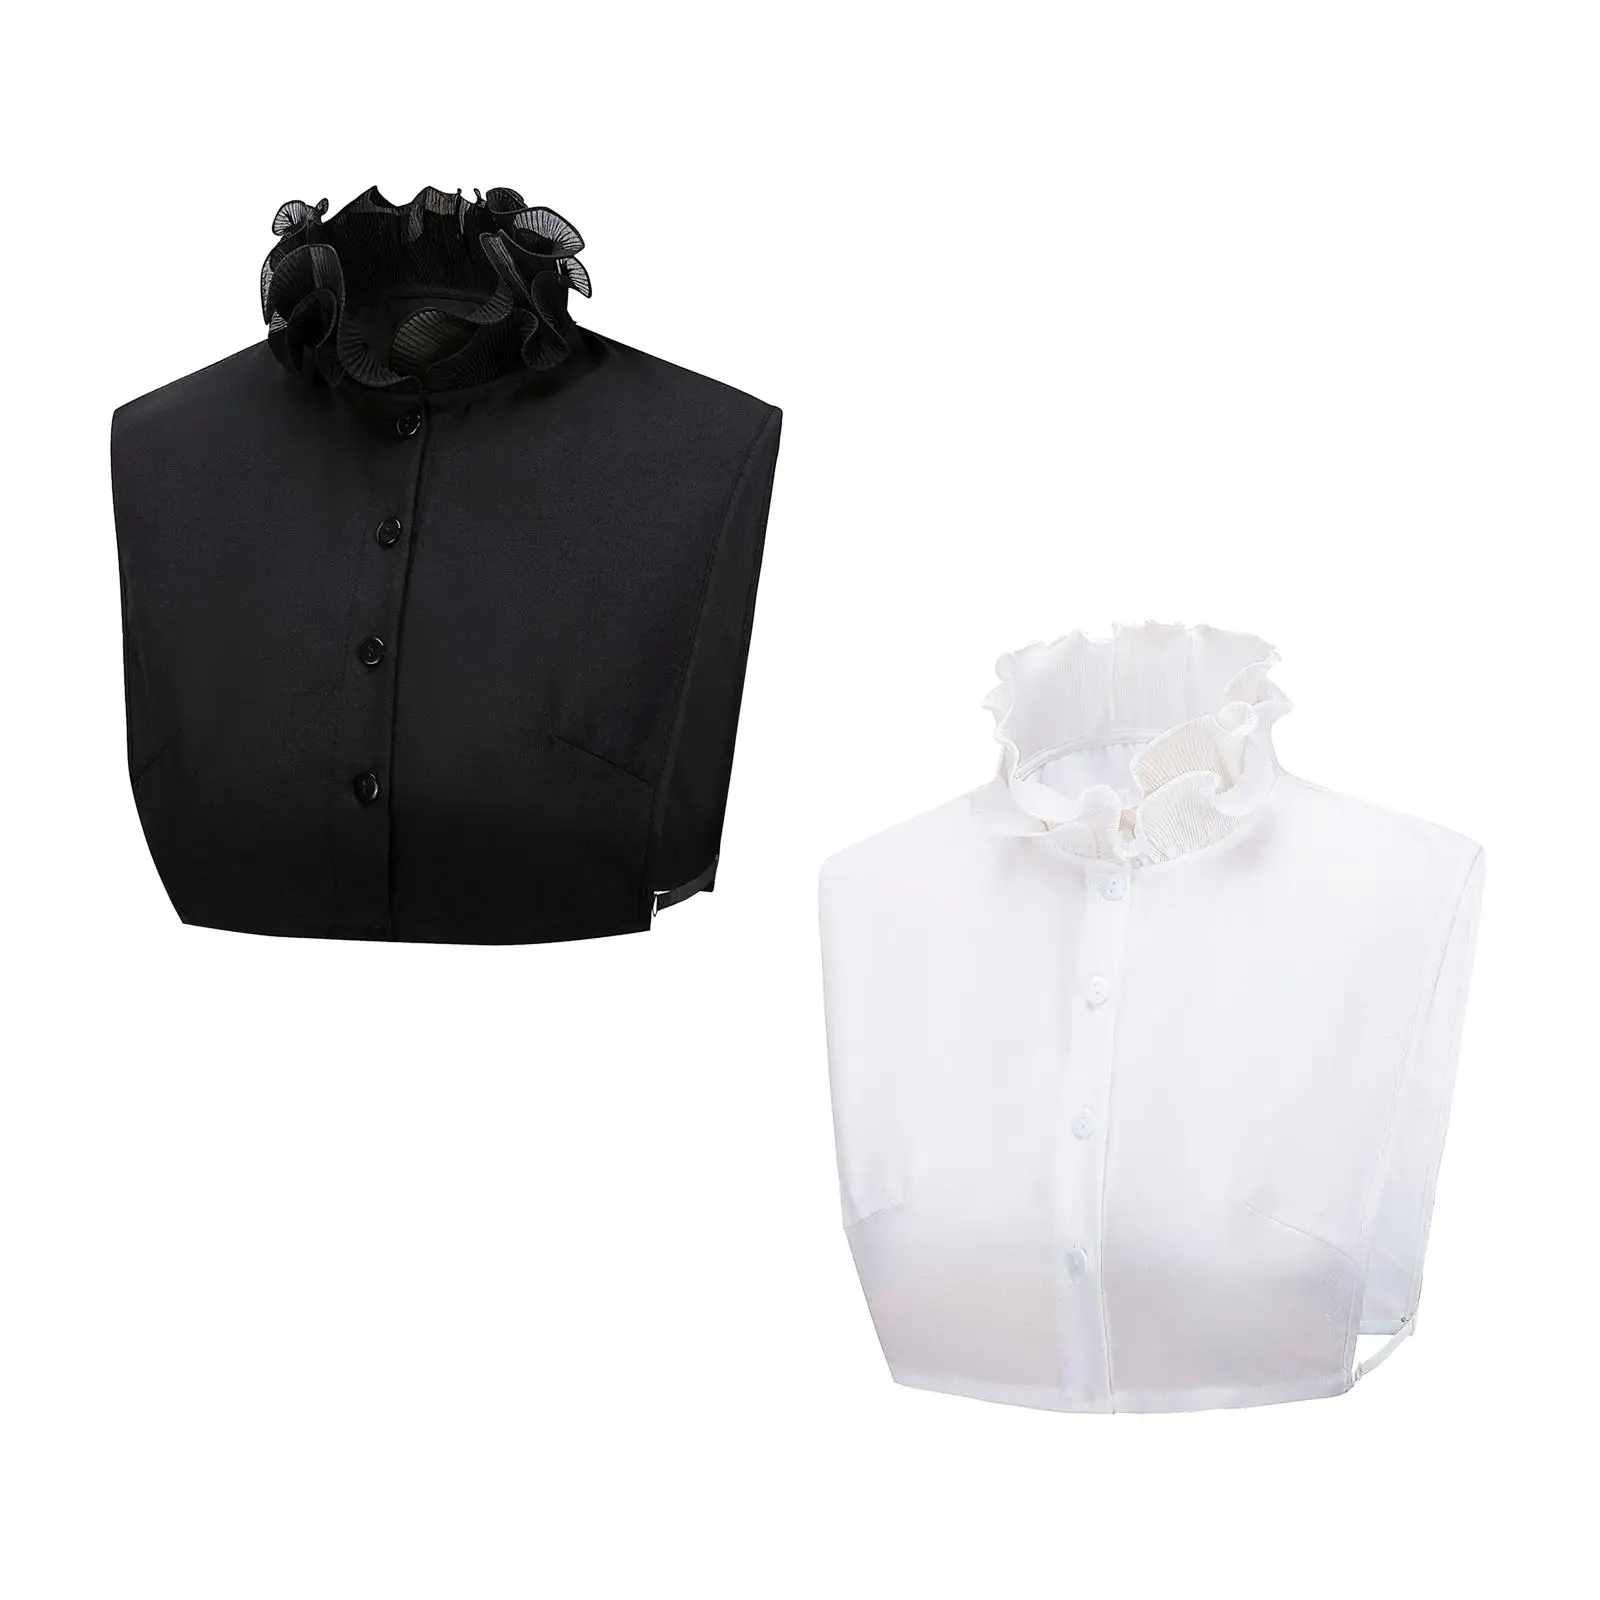 Detachable Collar Versatile Half Shirts False Collar Half Shirt Collar for T Shirt Clothing Accessories Sweaters Dress Ladies